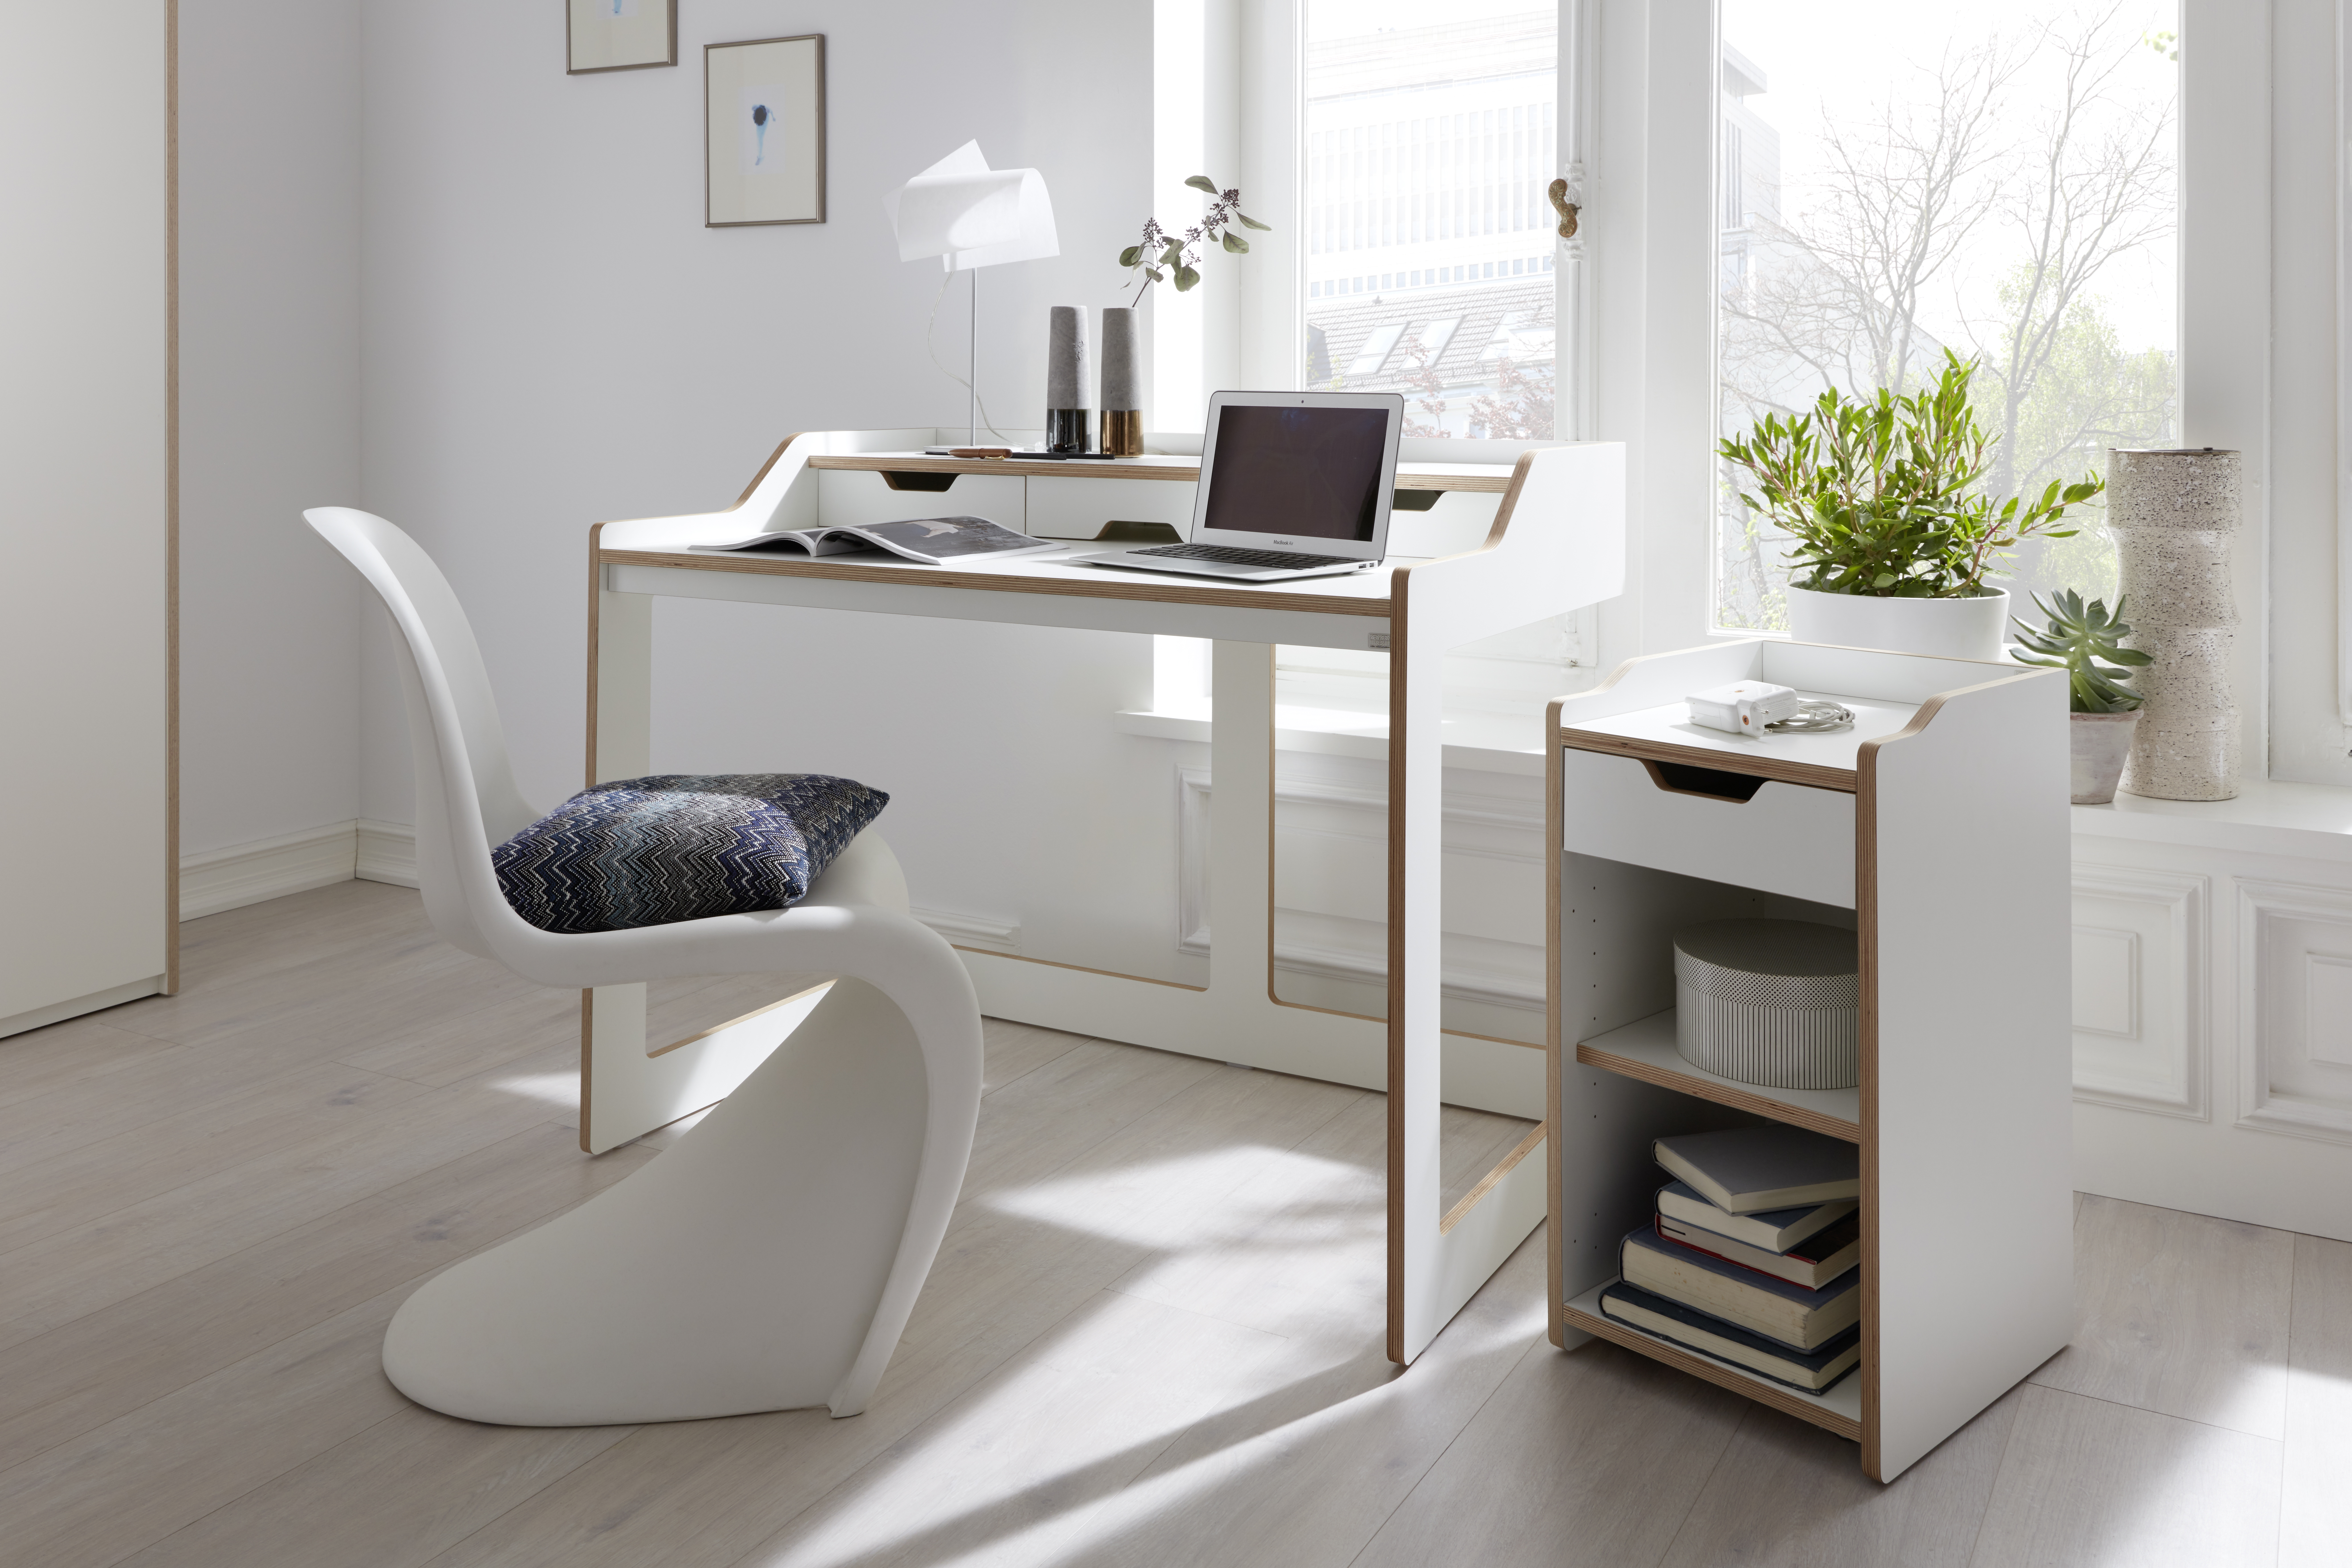 German Furniture for Small Spaces, Condos, Apartments | Mueller Emform USA | Möbelfüße